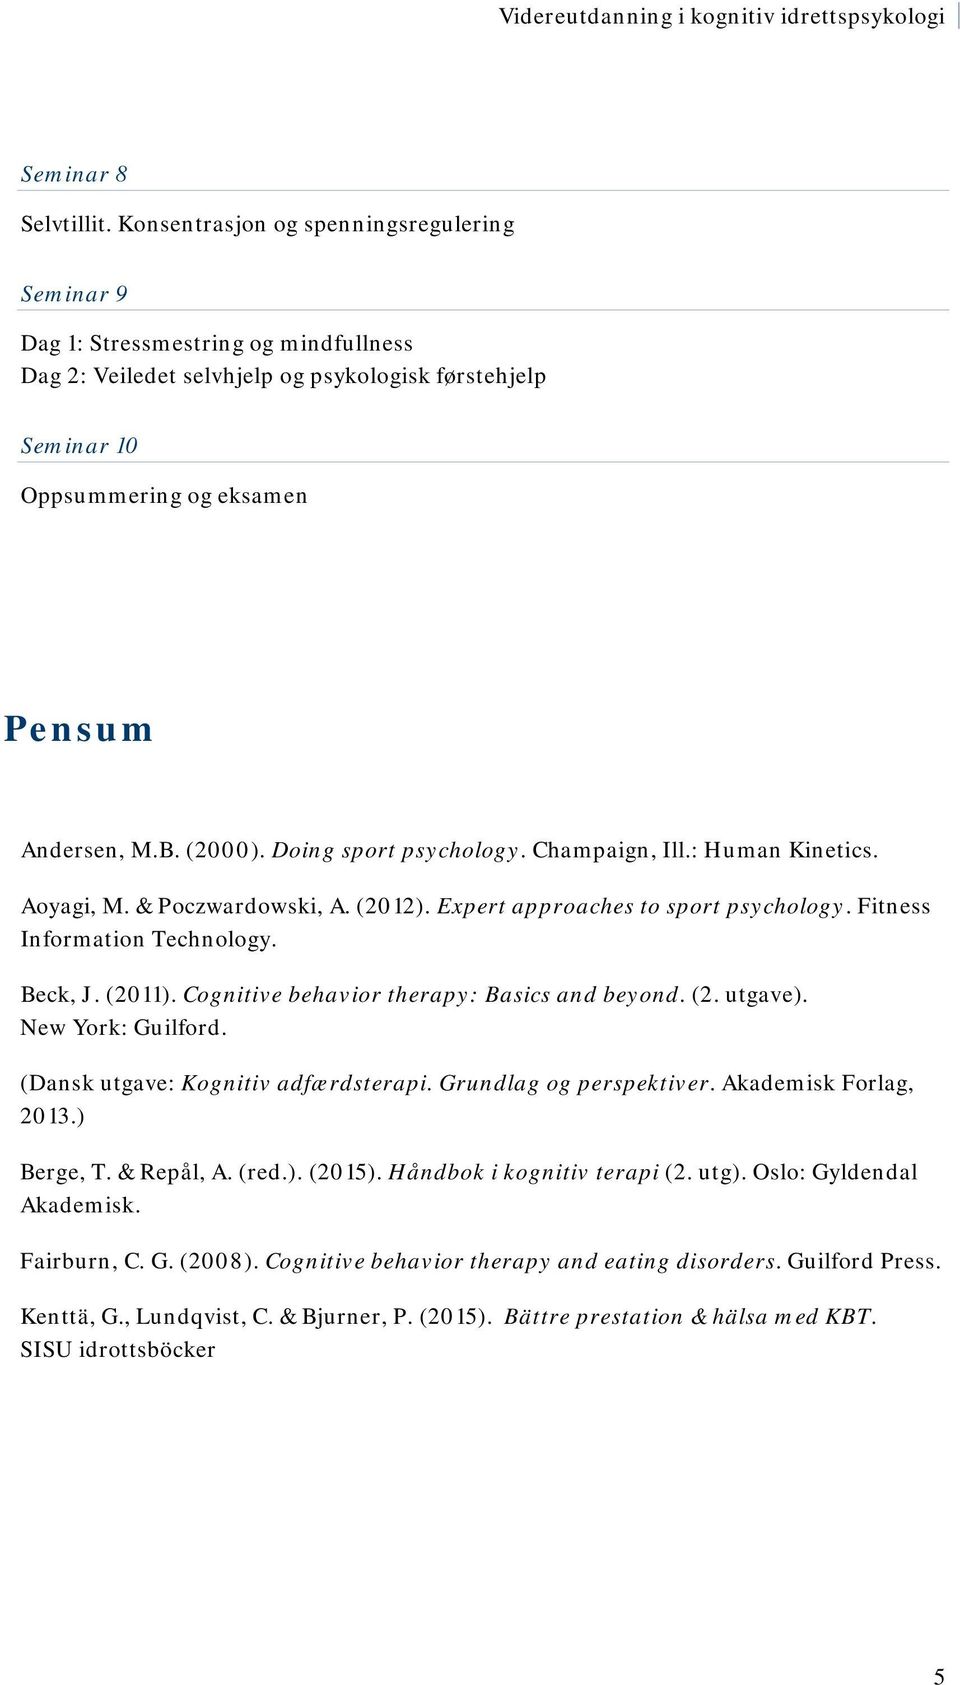 (2000). Doing sport psychology. Champaign, Ill.: Human Kinetics. Aoyagi, M. & Poczwardowski, A. (2012). Expert approaches to sport psychology. Fitness Information Technology. Beck, J. (2011).